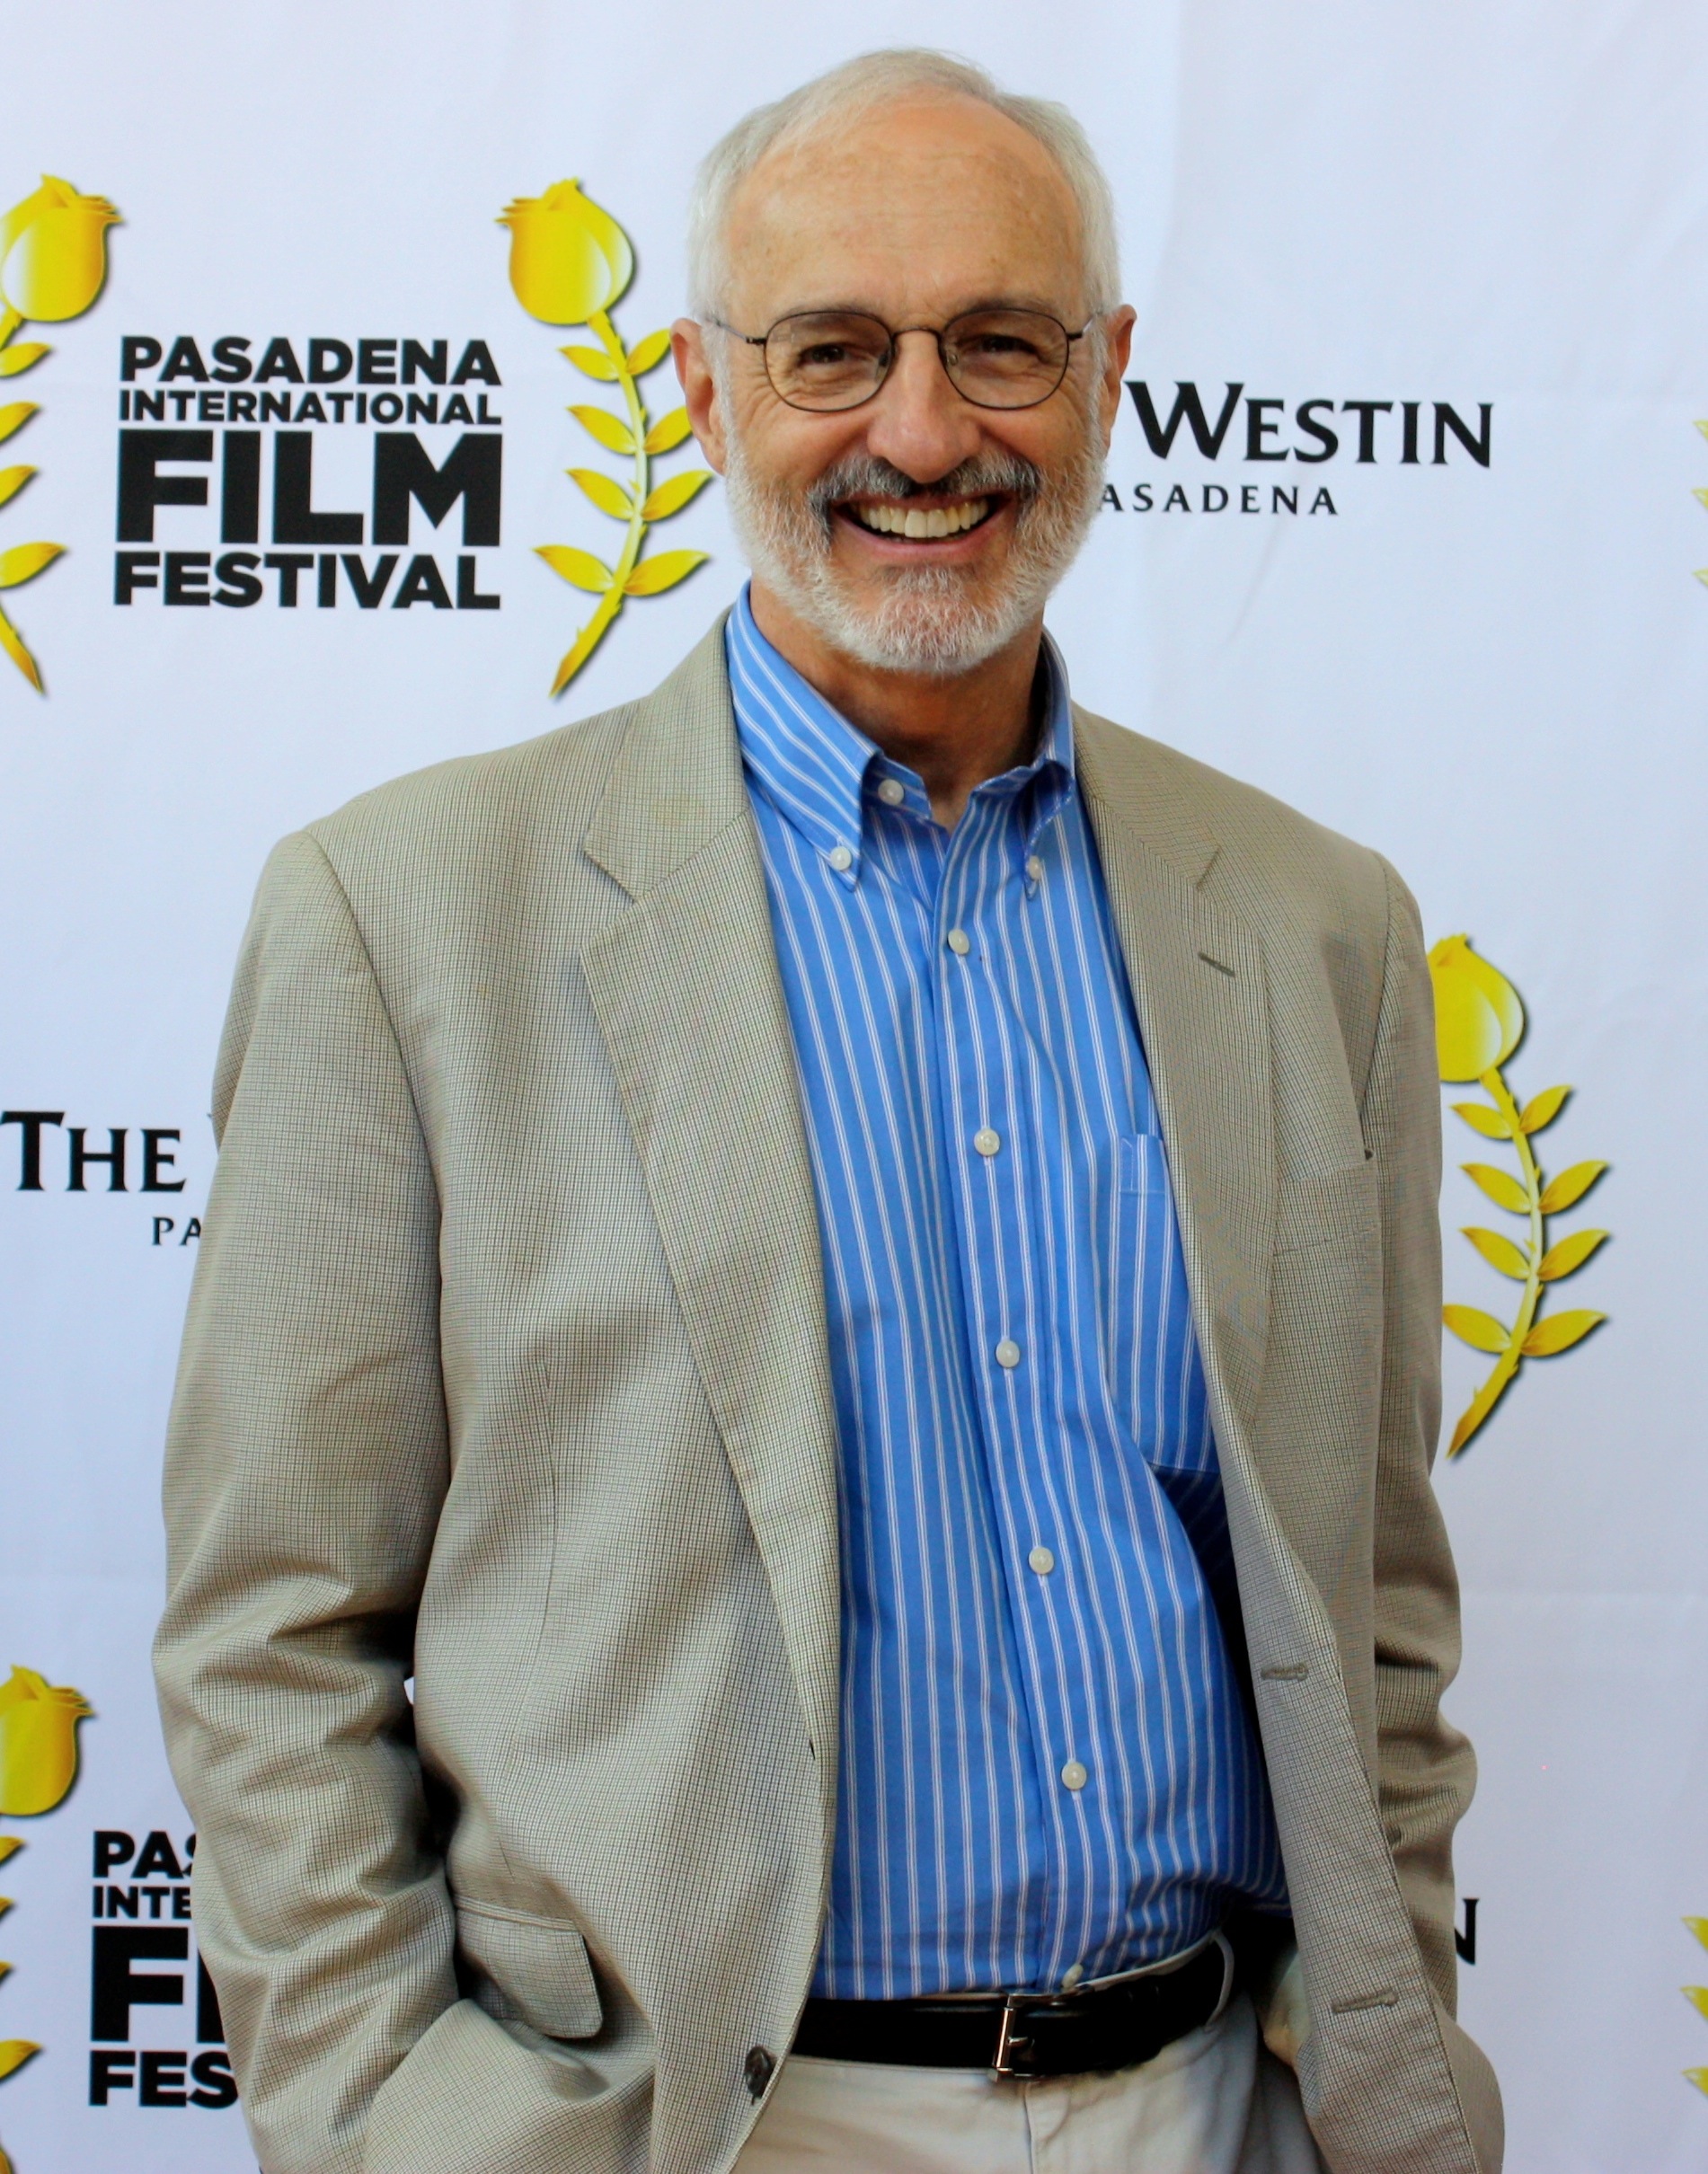 Career Inspiration Award honoree Michael Gross on the red carpet at the Pasadena International Film Festival, February 16, 2014.